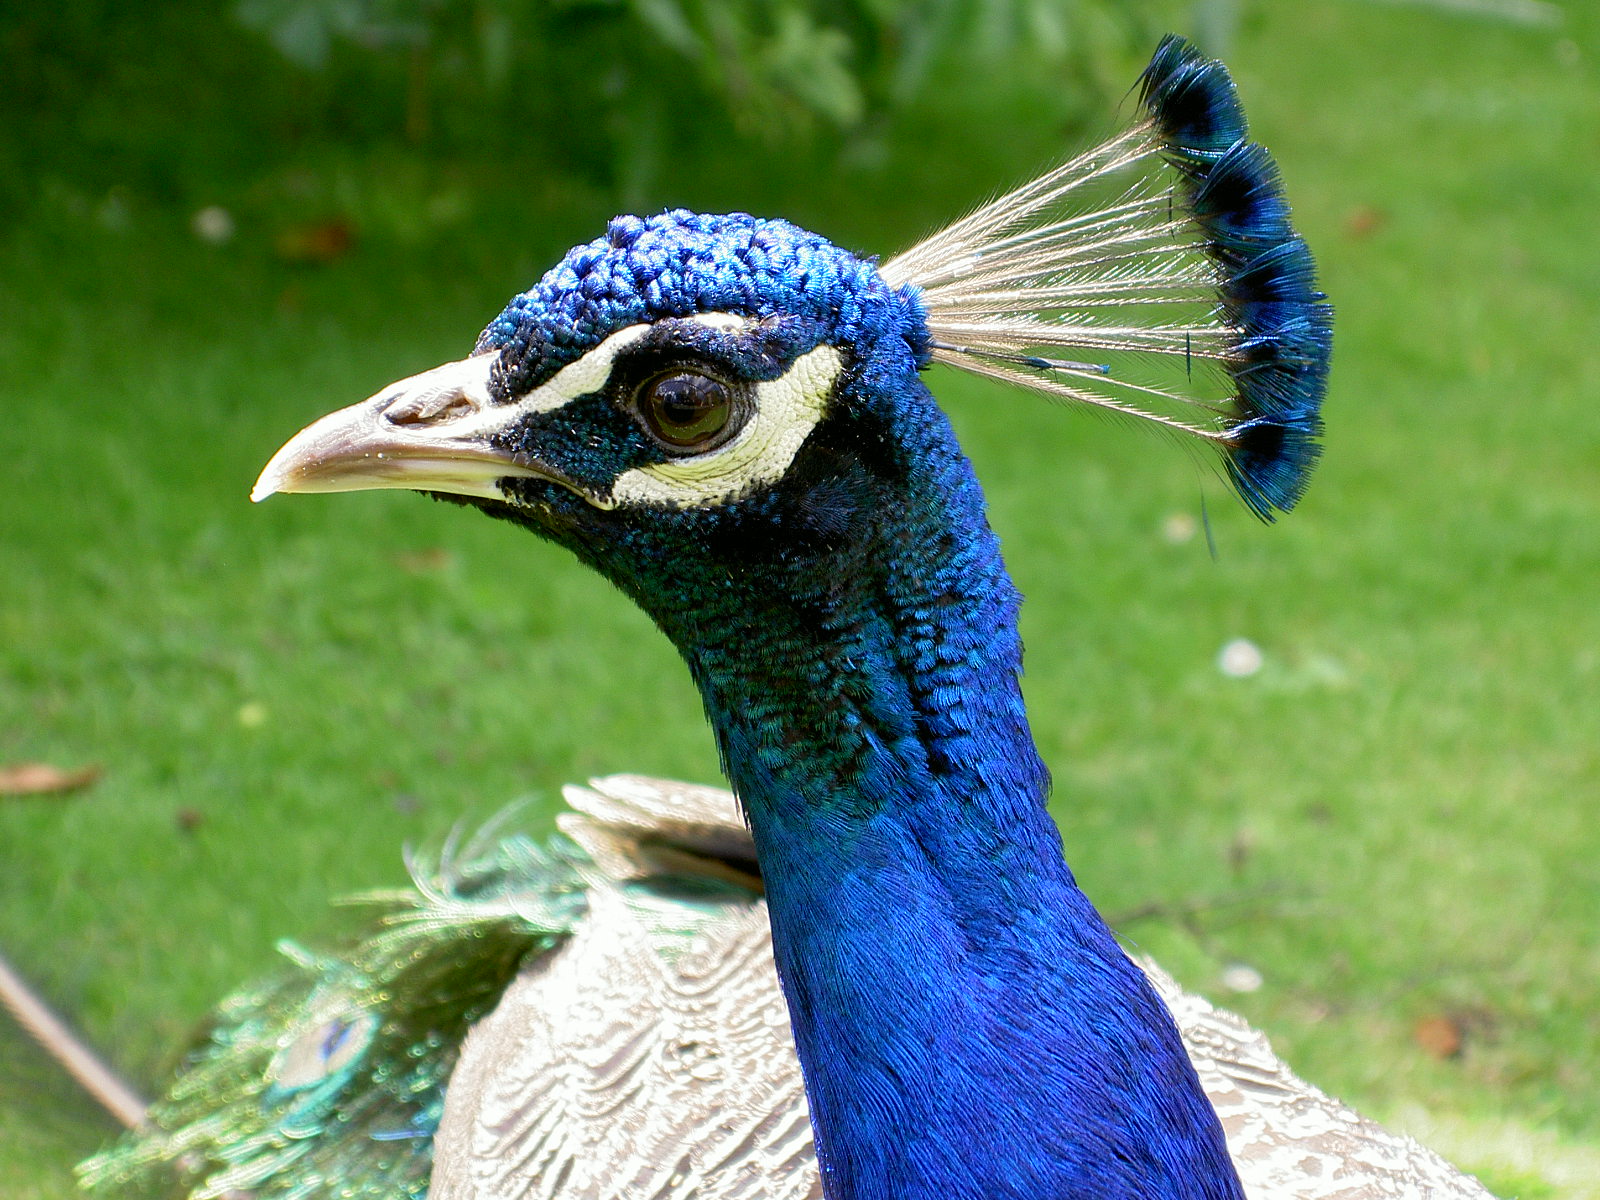 File:PeacockHead.jpg - Wikipedia